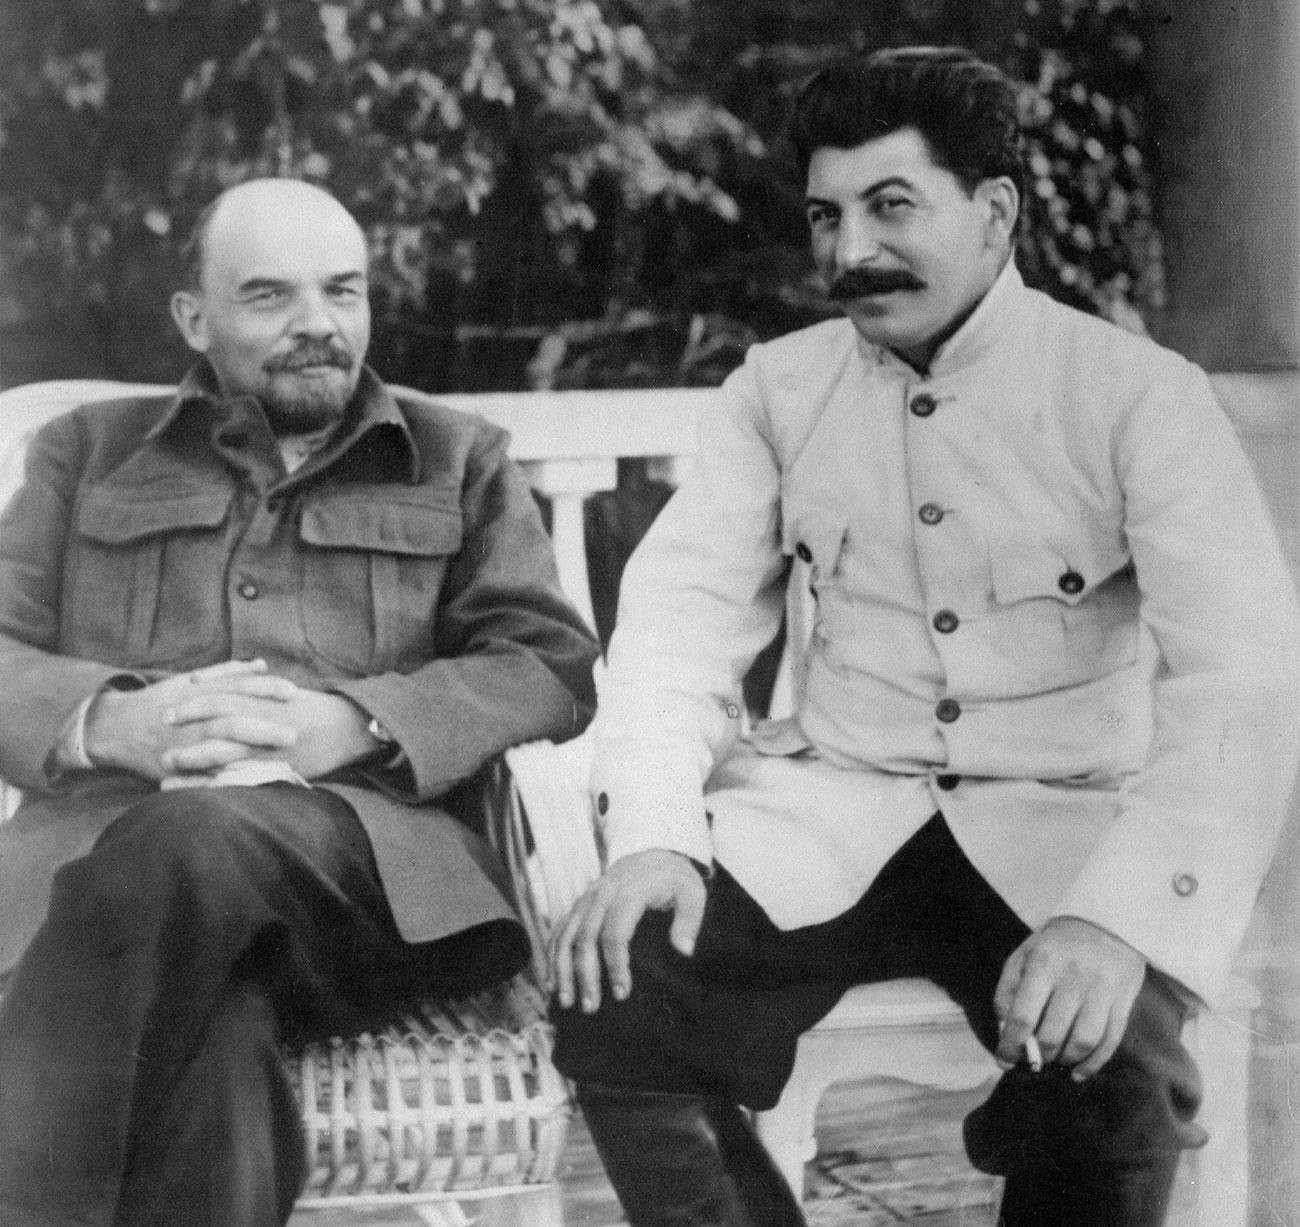 Lenin and Stalin, circa the 1920s.